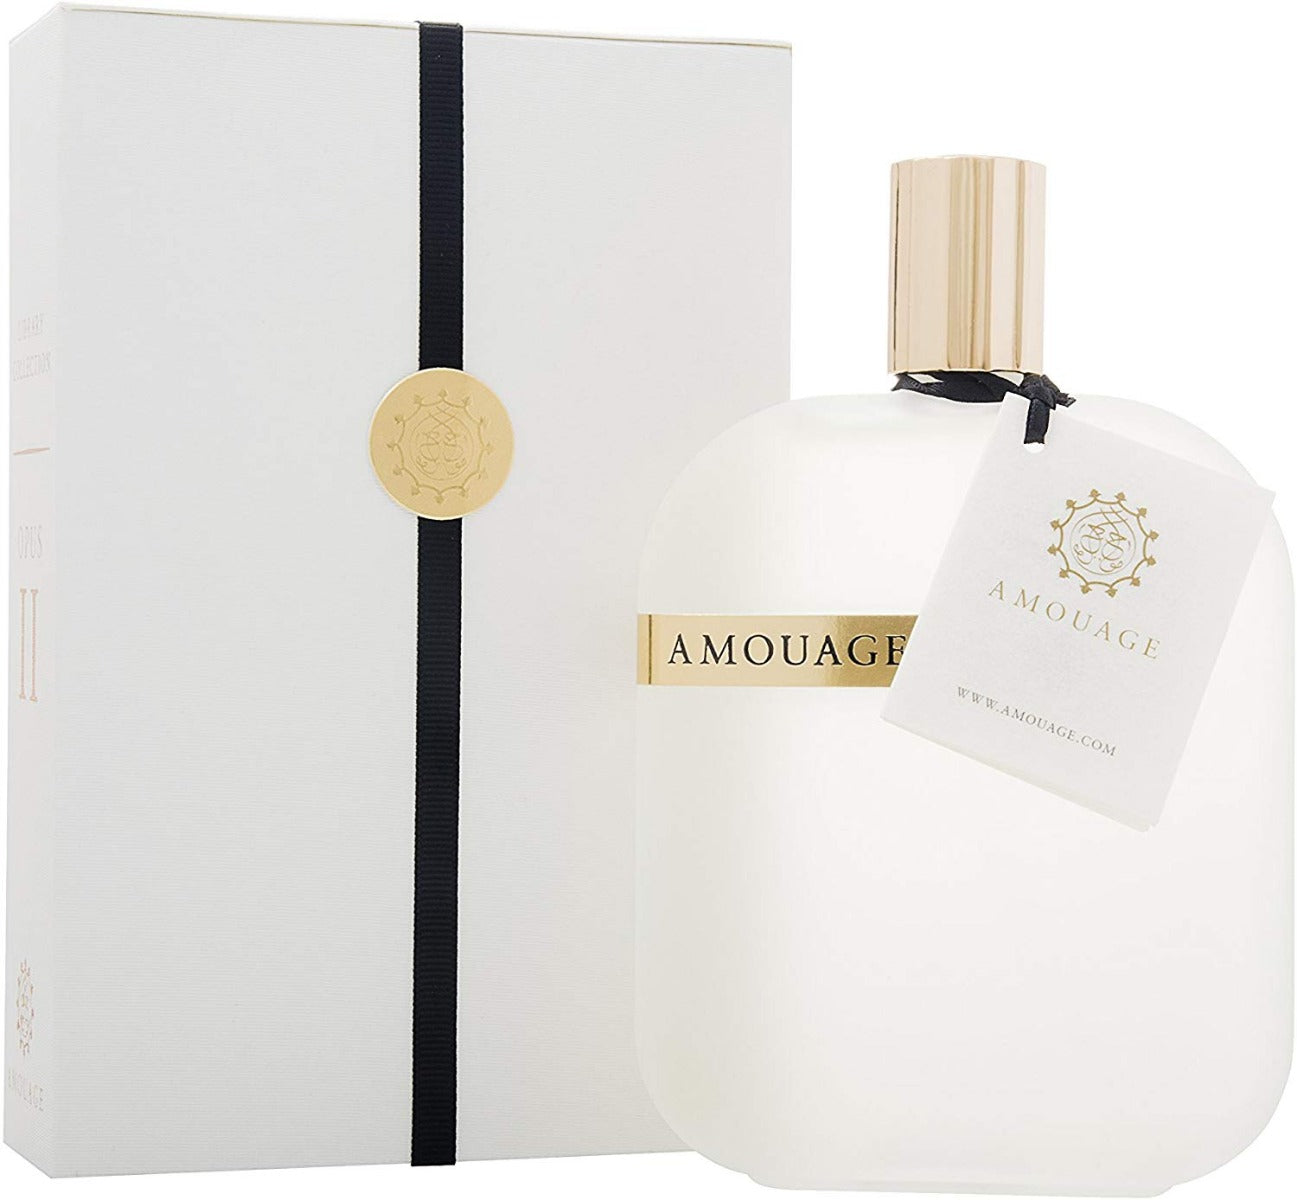 Amouage Library Collection Opus II Eau De Parfum - Perfume for Men & Women, 100 ml - samawa perfumes 